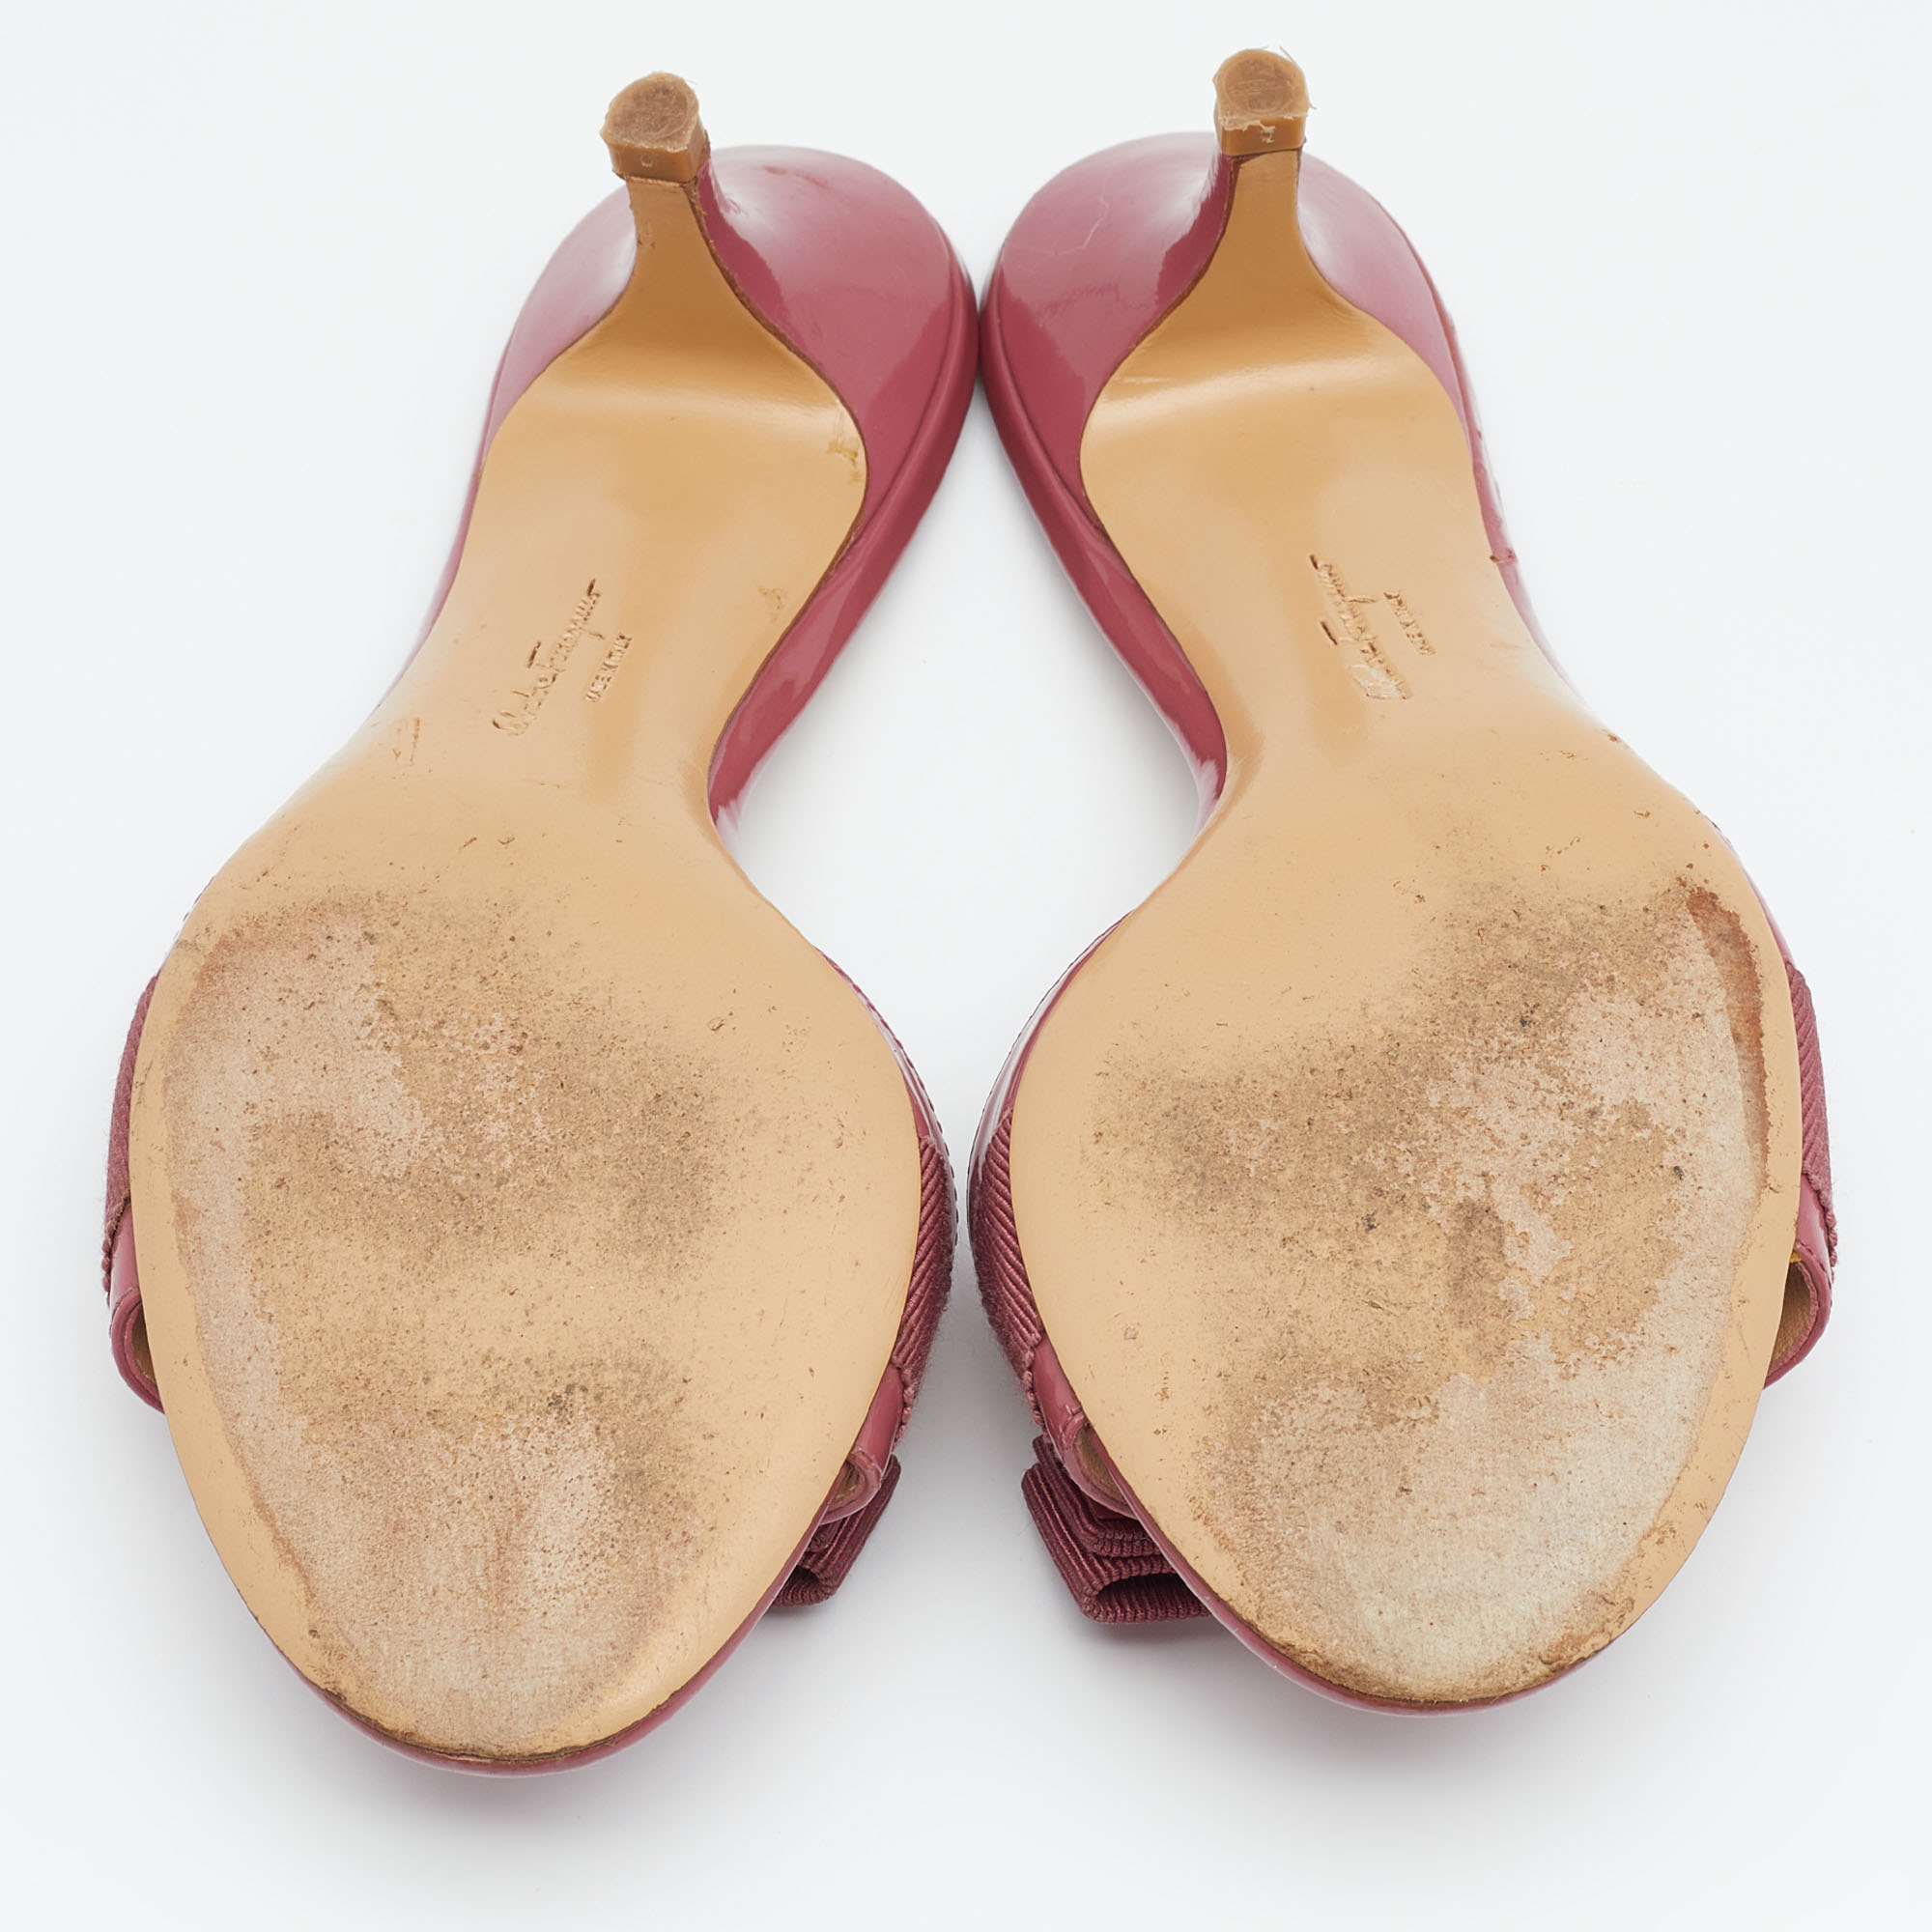 Salvatore Ferragamo Pink Patent Glory Bow Sandals Size 37.5